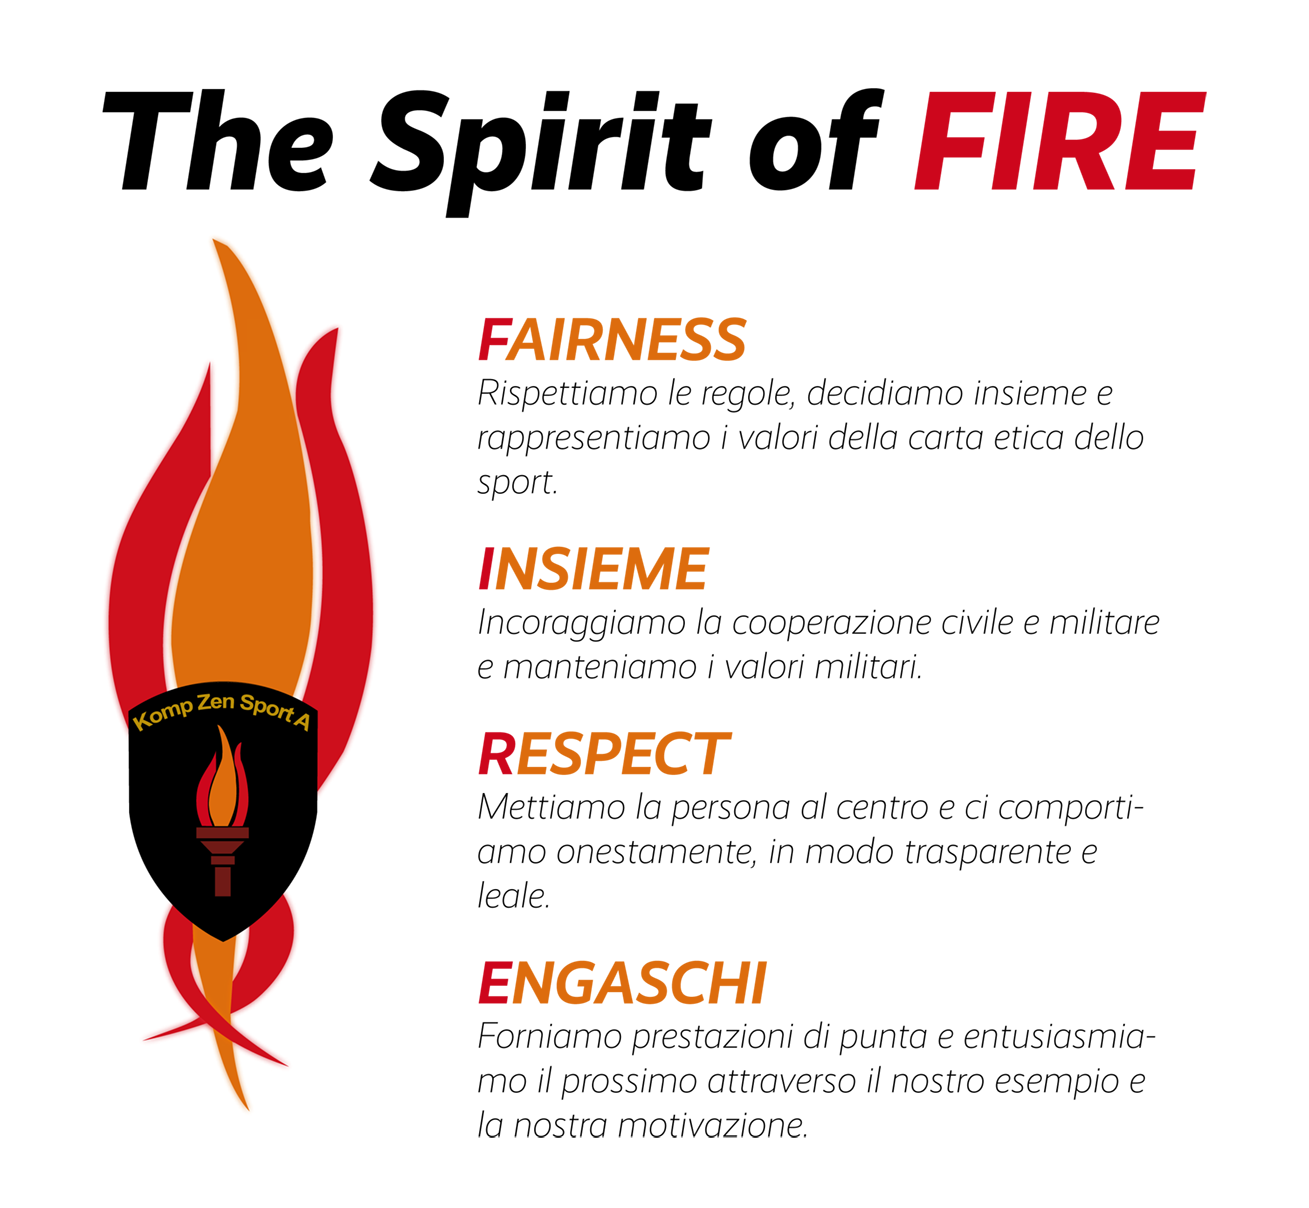 The Spirit of FIRE